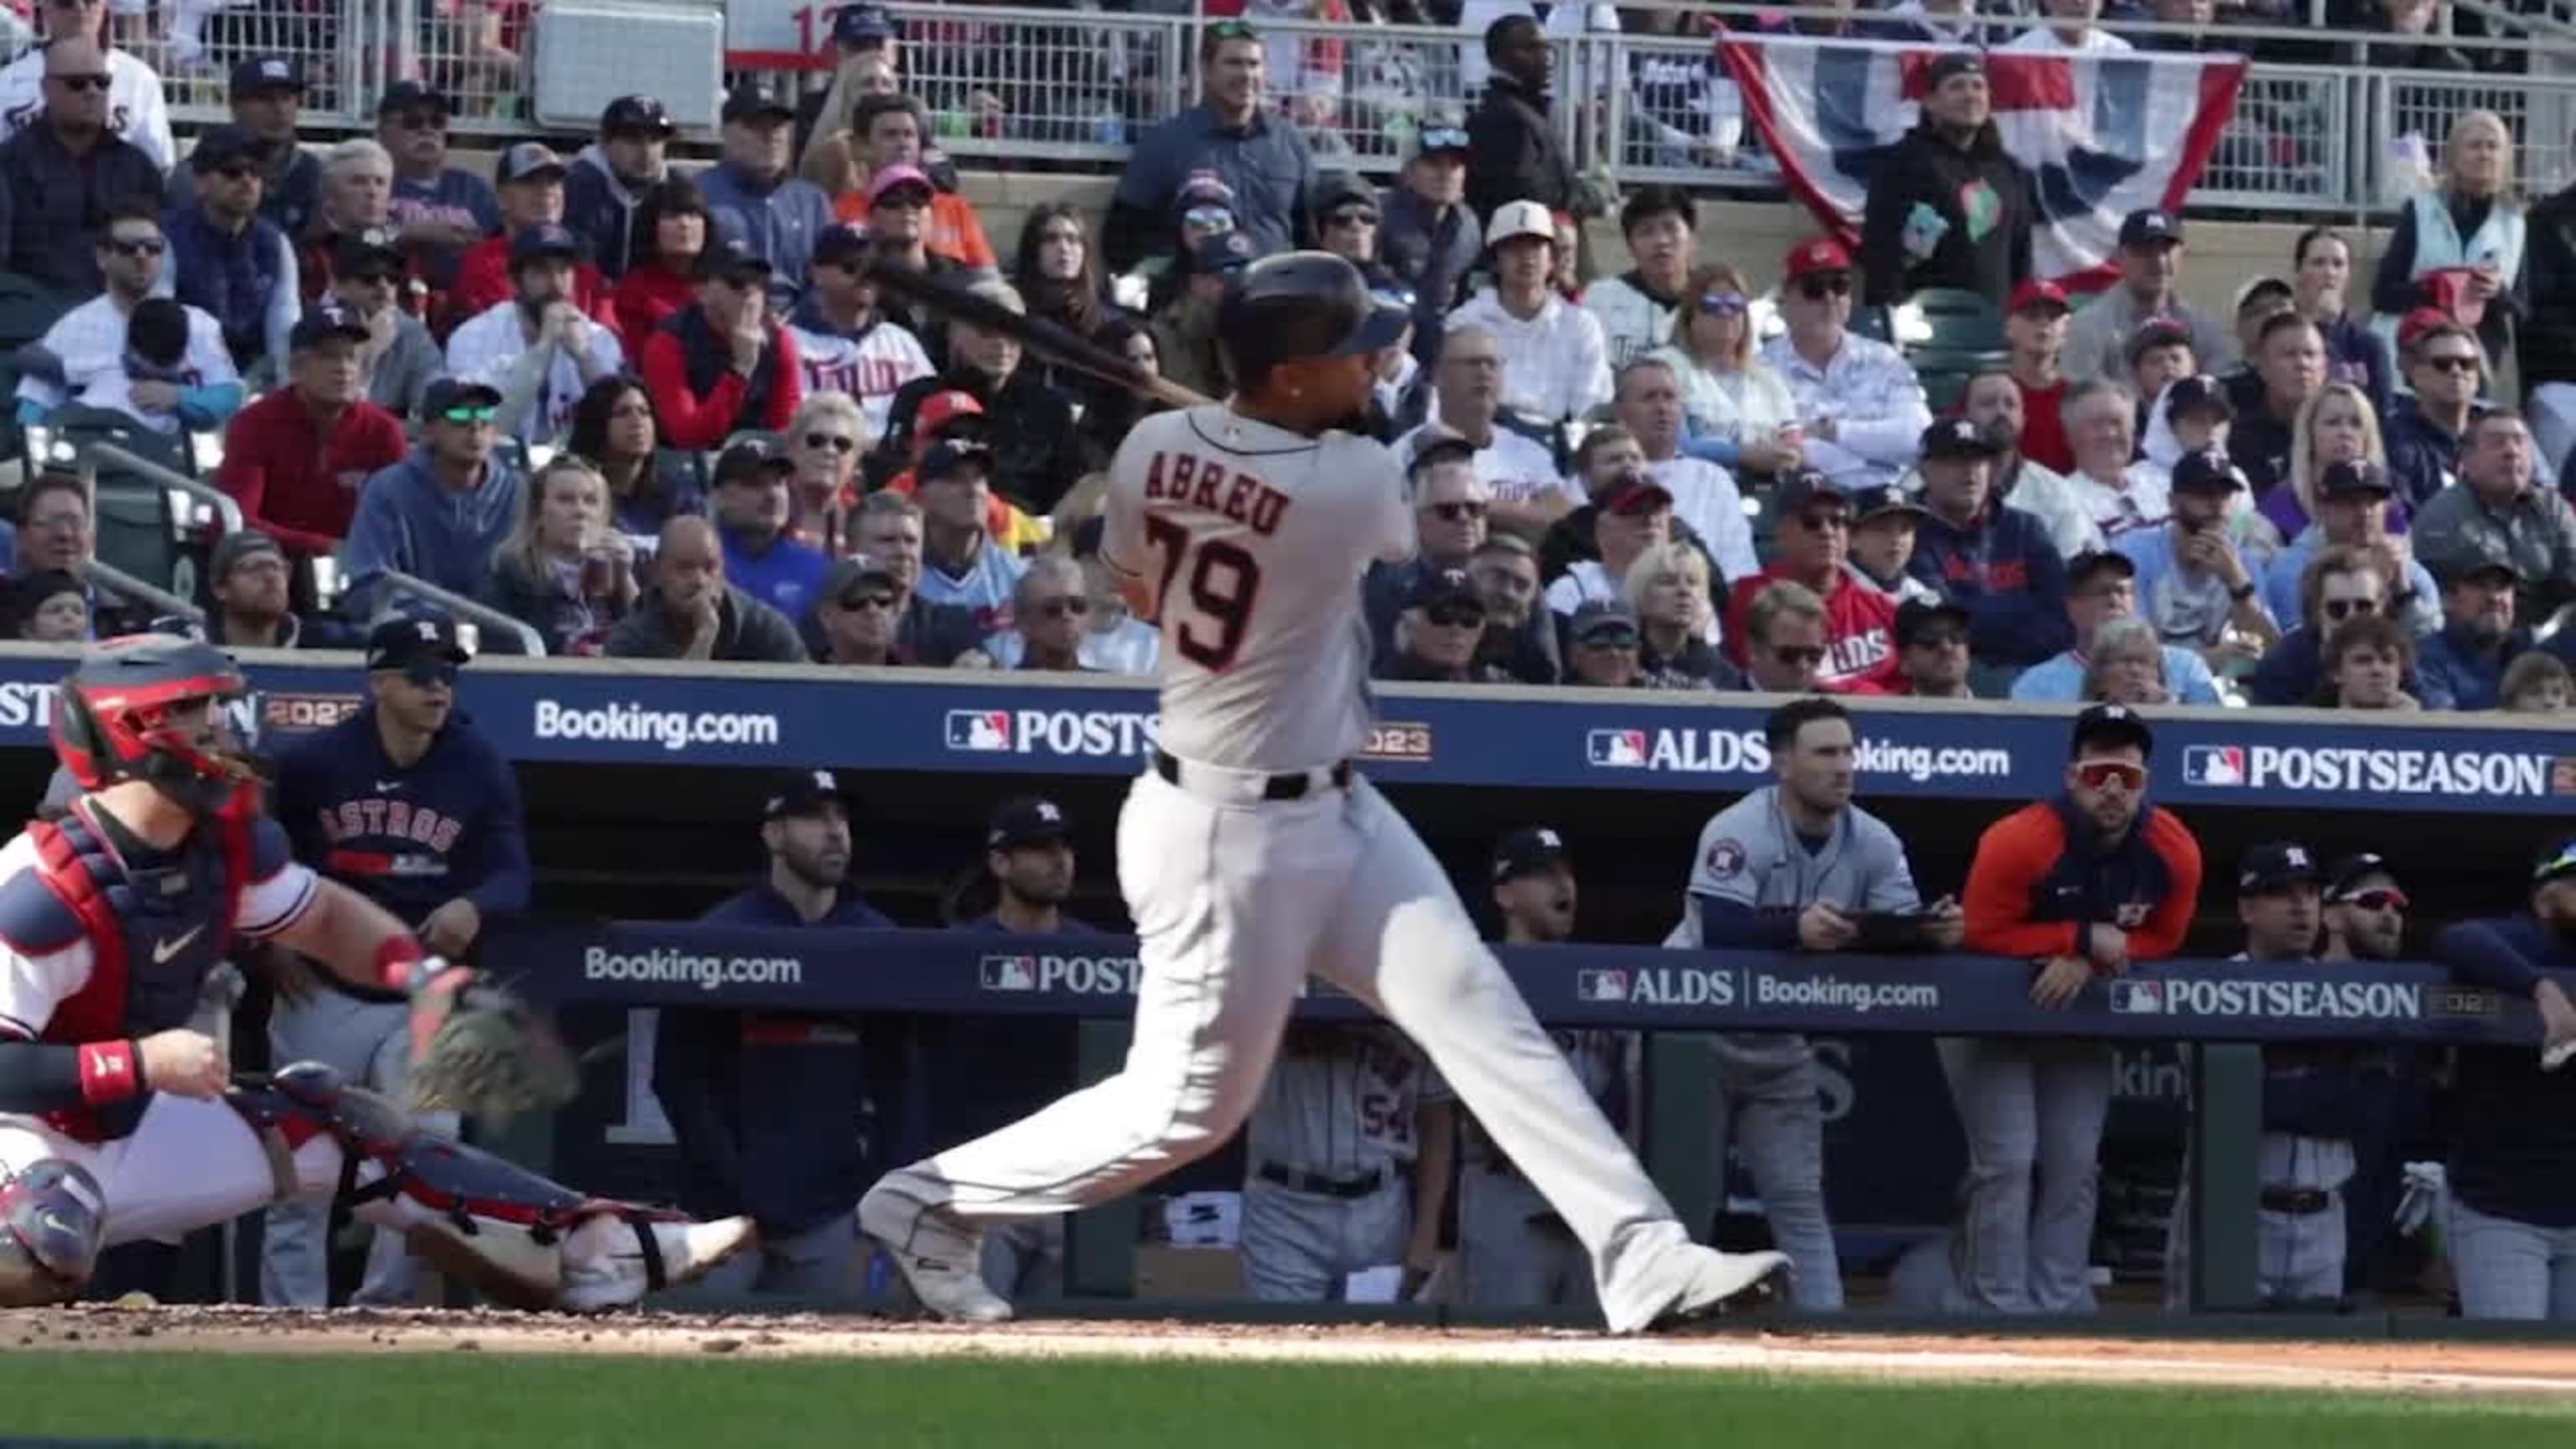 Alex Bregman Game-Used Jersey- MLB Record for Postseason Home Runs